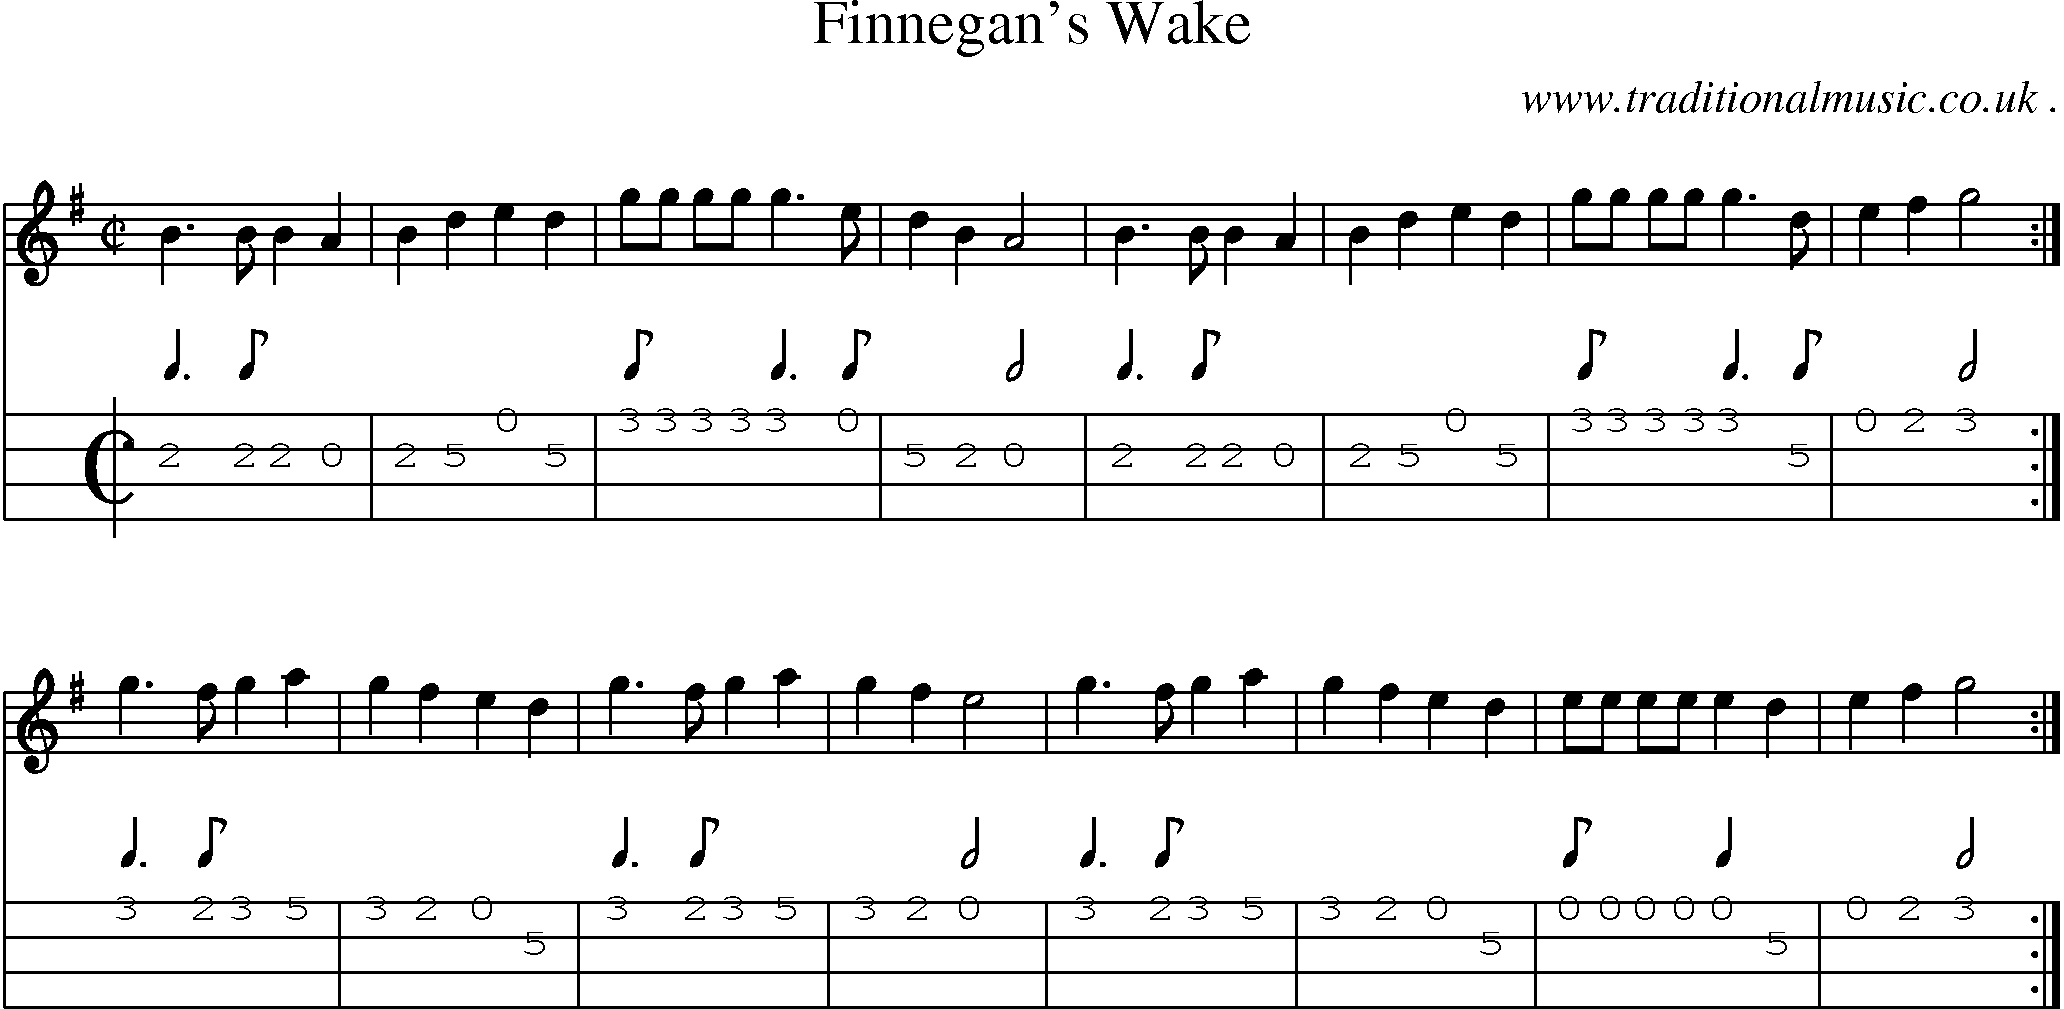 Sheet-Music and Mandolin Tabs for Finnegans Wake